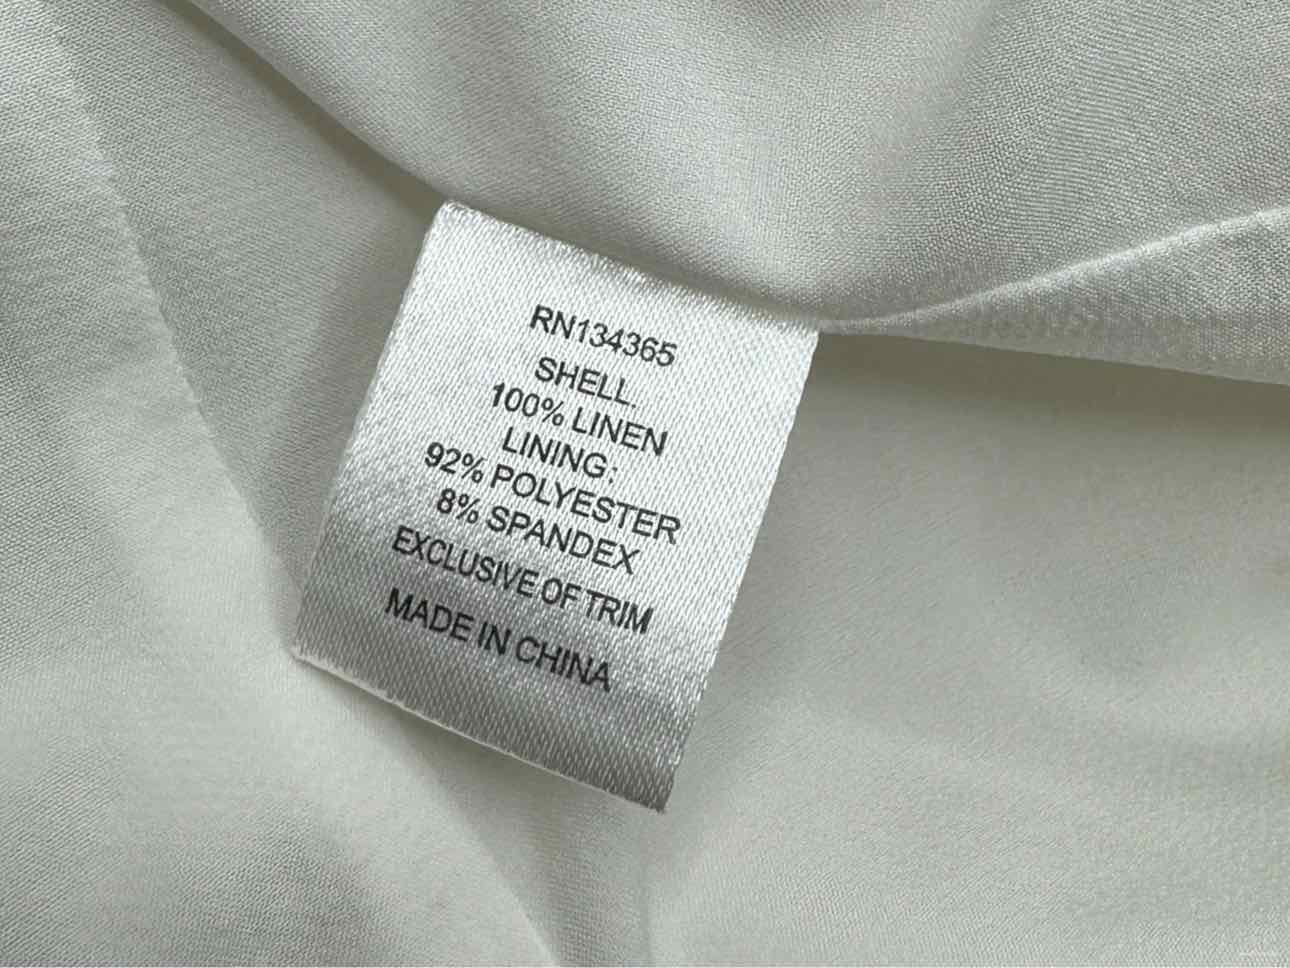 SIGRID OLSEN signature White 100% Linen Sleeveless Dress Size 8